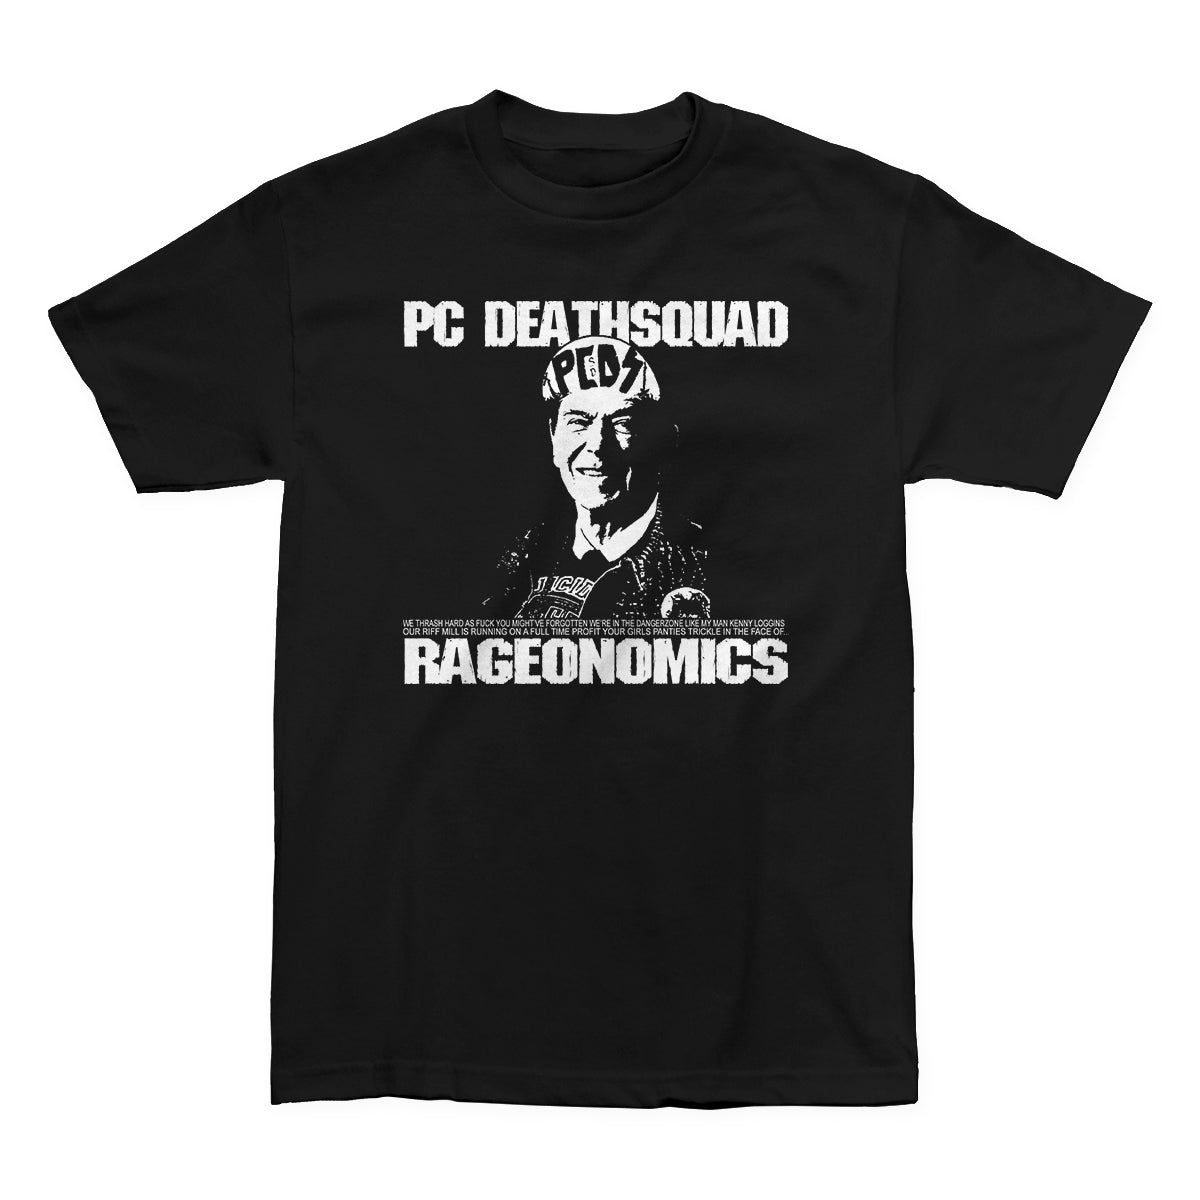 PC Deathsquad "Rageonomics" Shirt